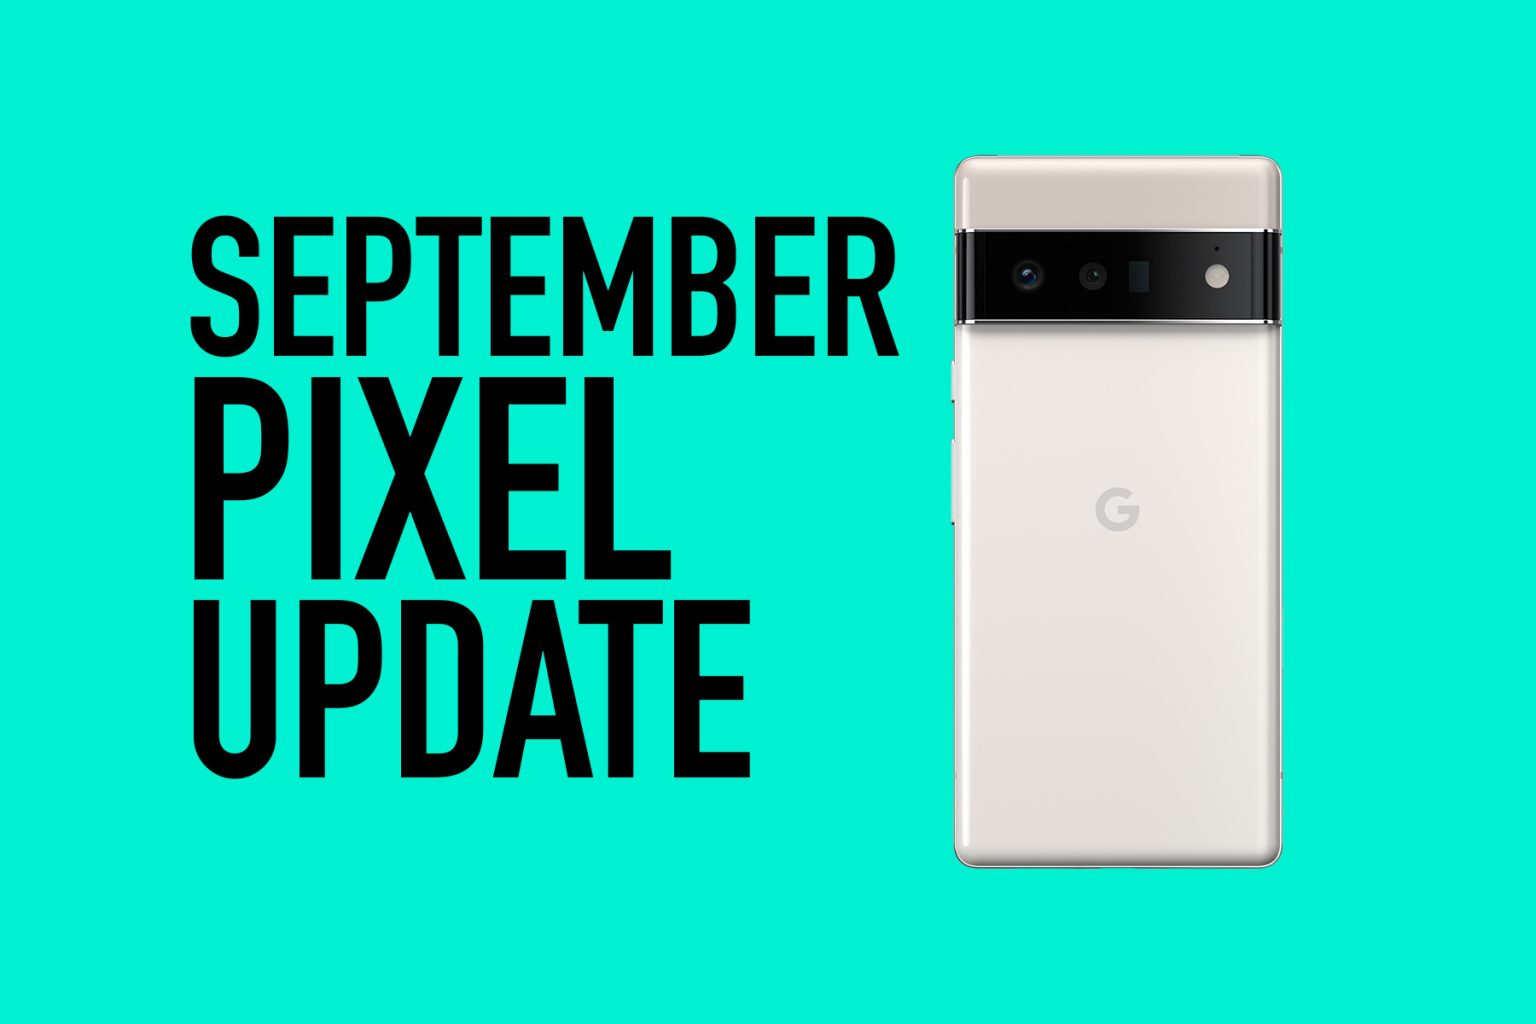 Your Google Pixel Phone's September Update Arrived